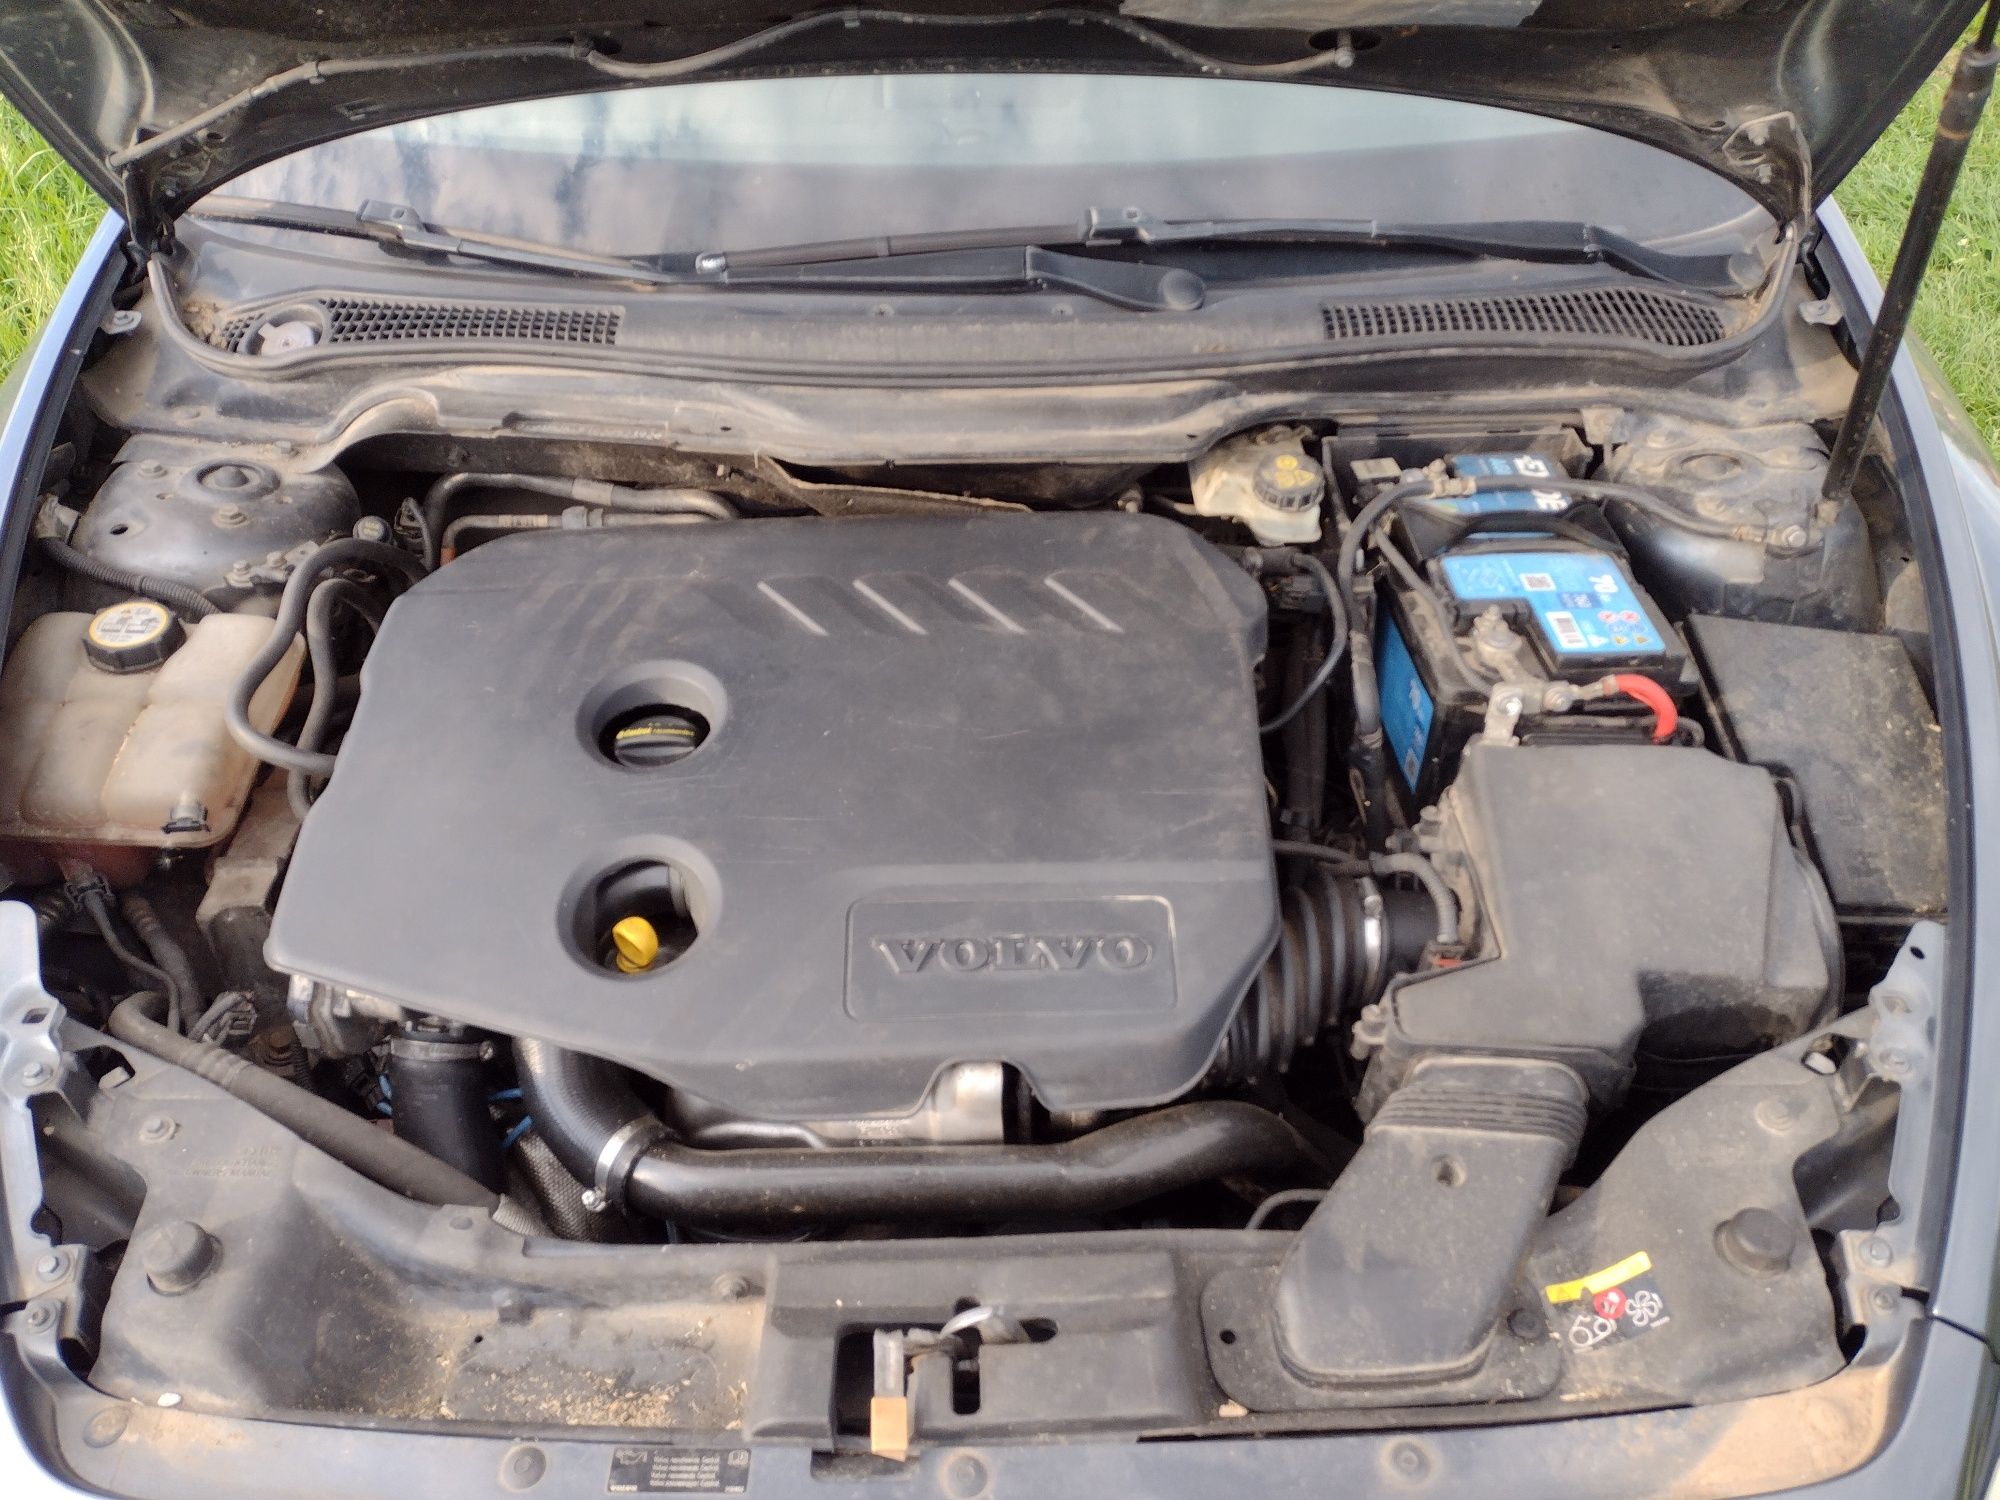 Volvo V50 ( motor defect )